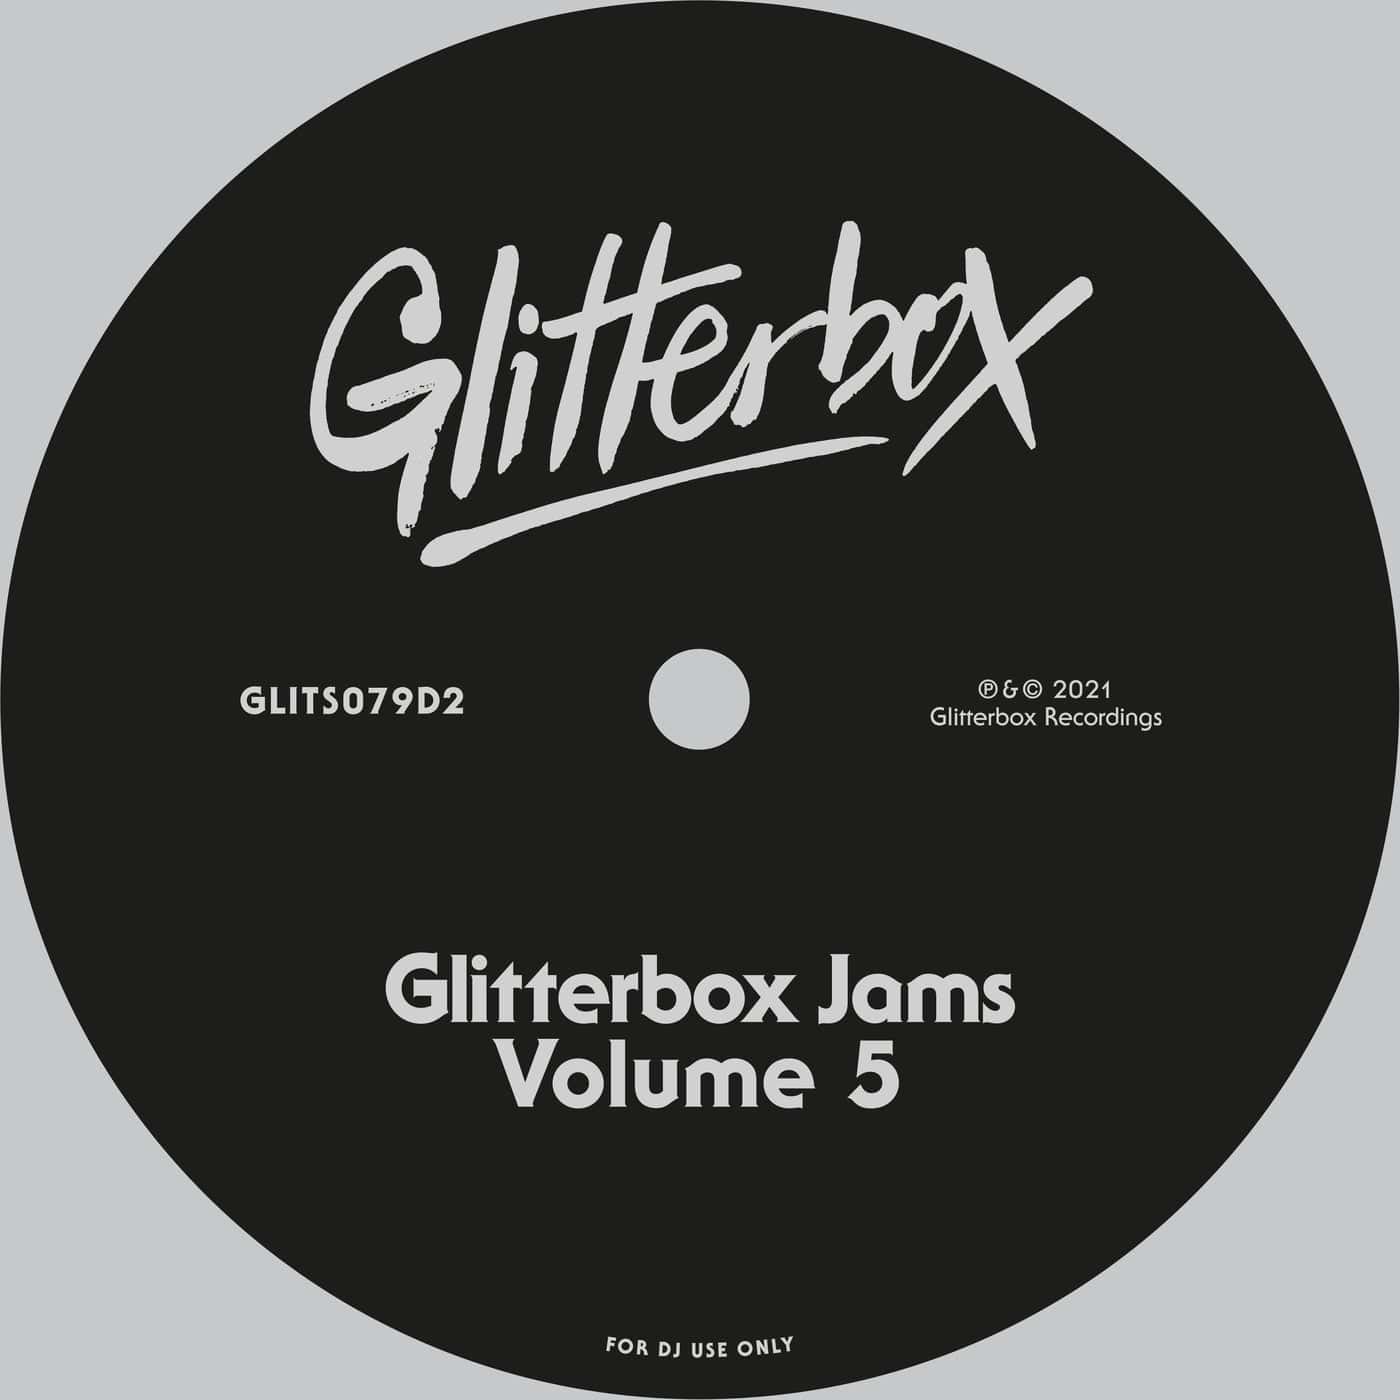 Download Glitterbox Jams, Vol. 5 on Electrobuzz